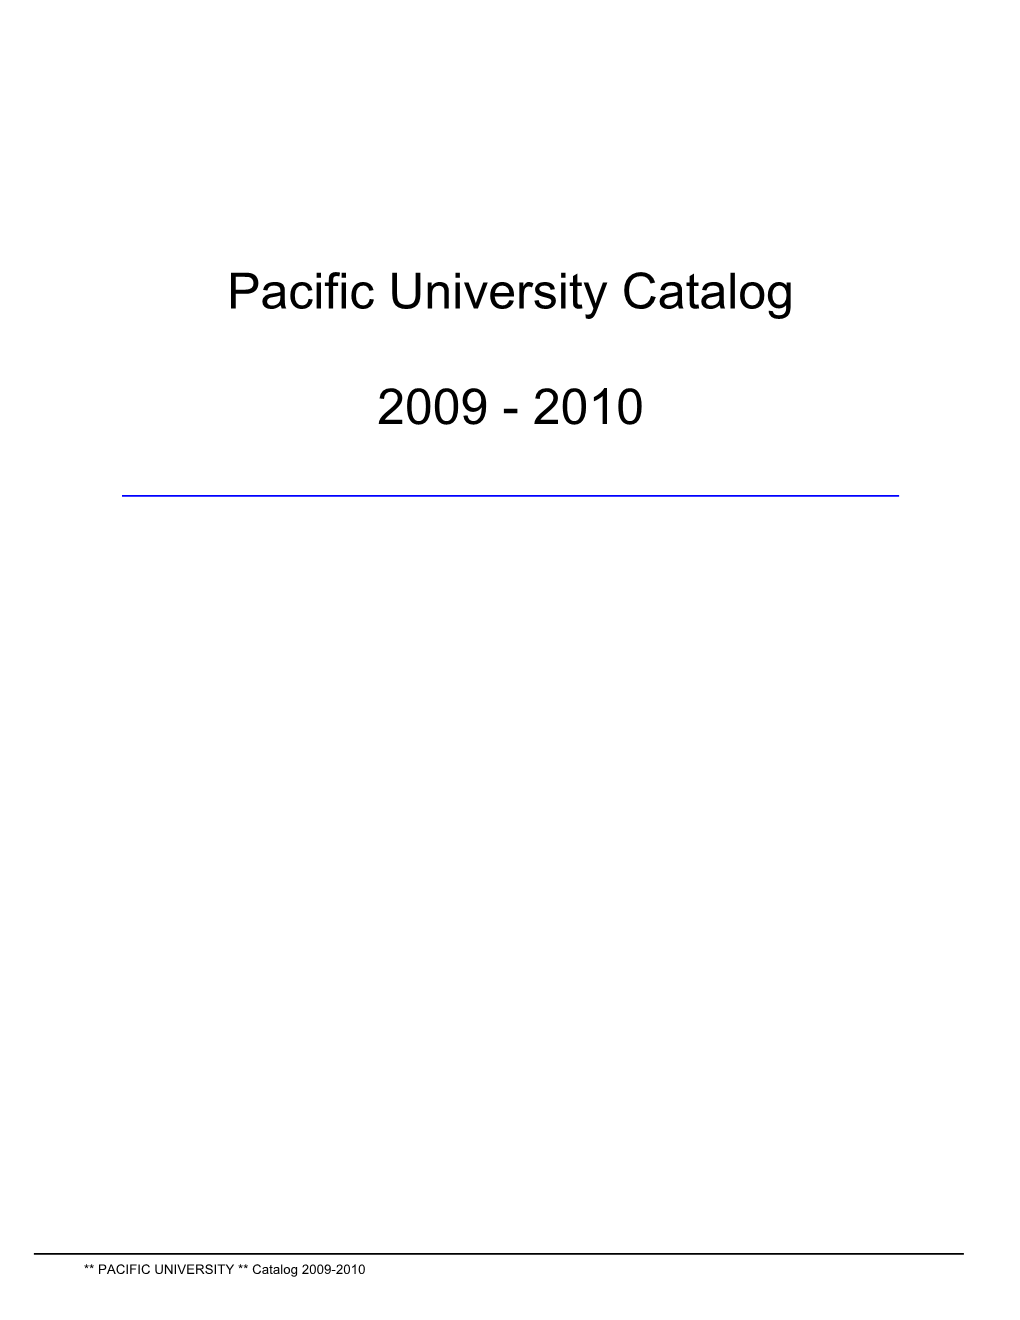 Pacific University Catalog 2009